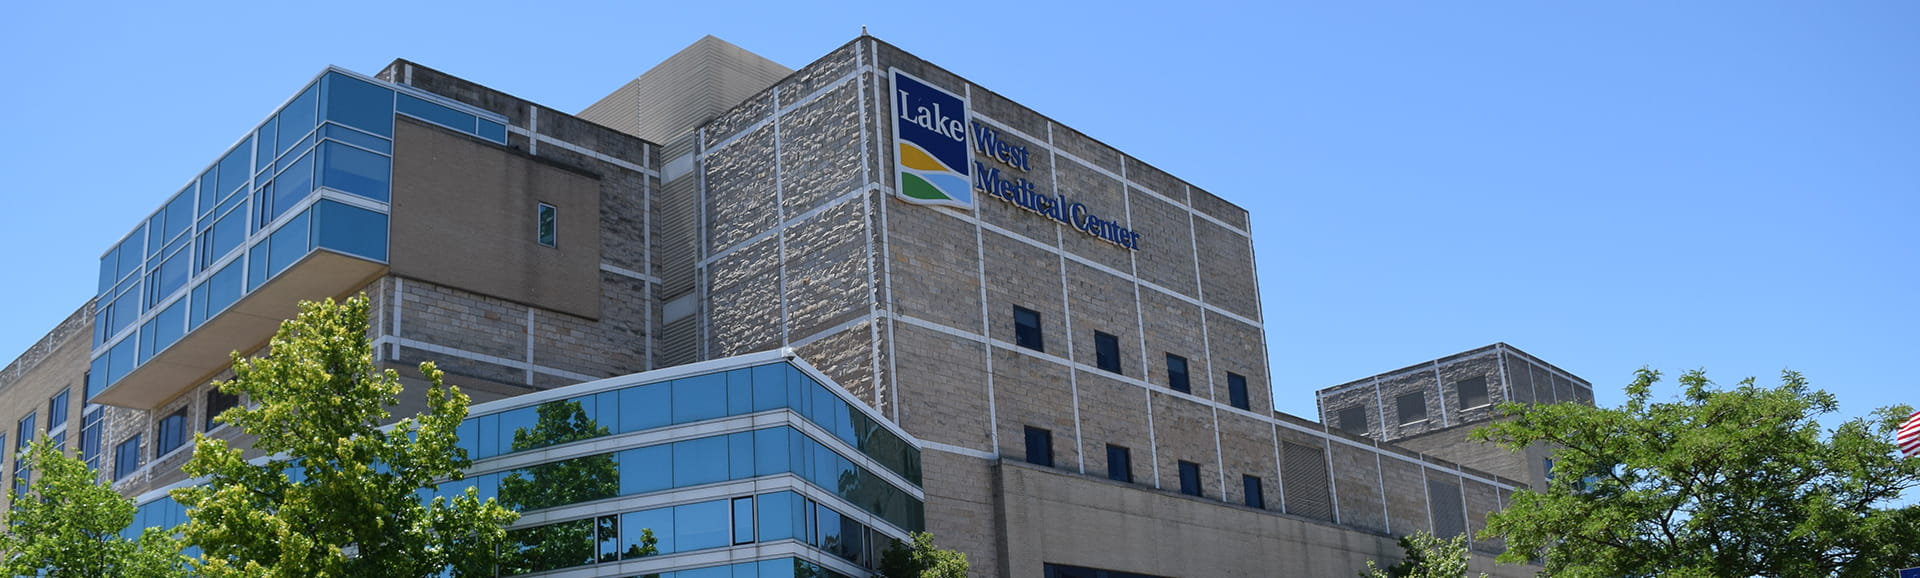 UH Lake West Medical Center